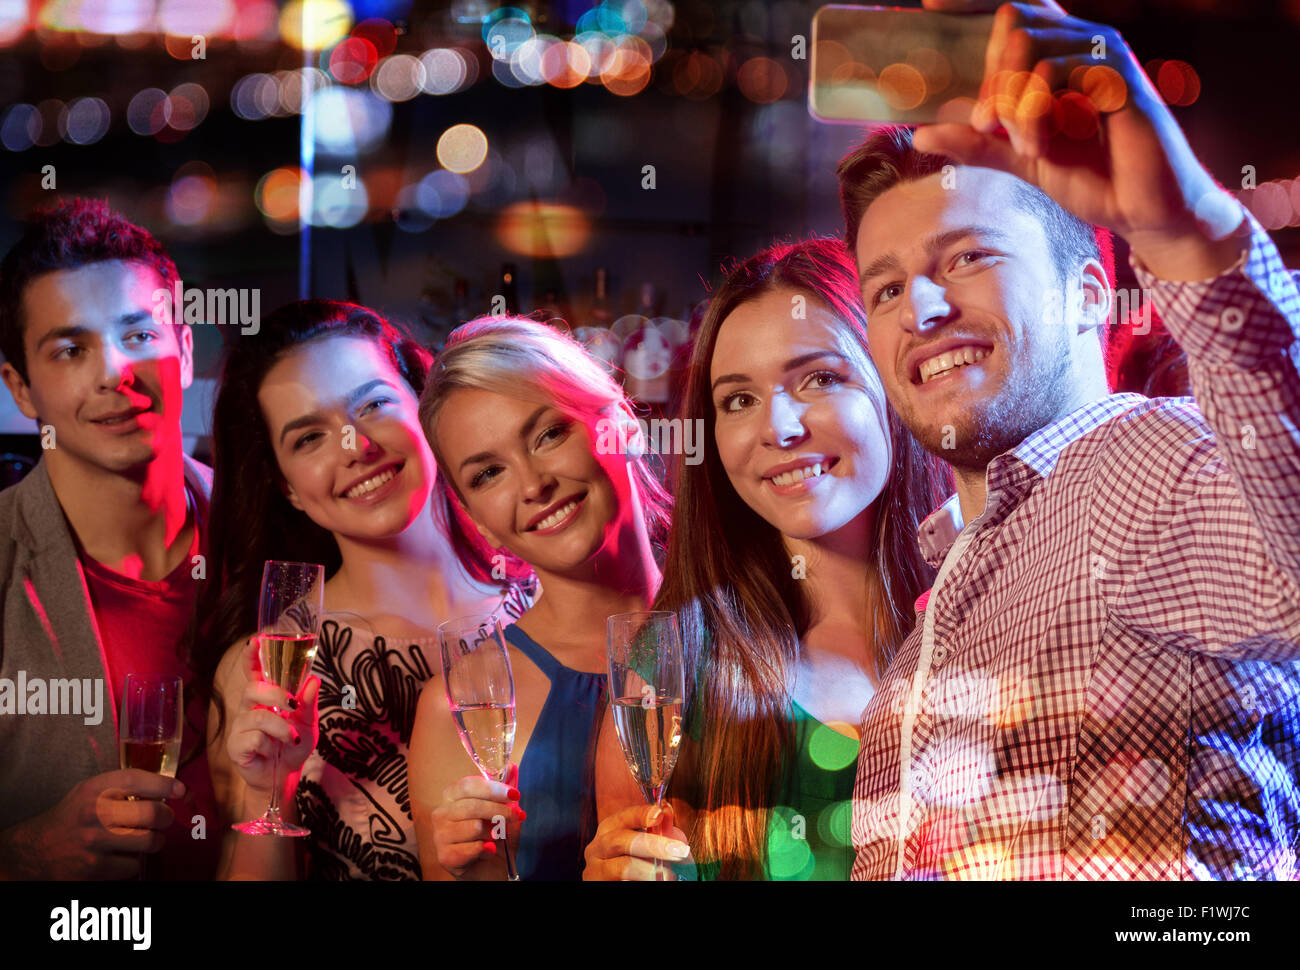 friends taking selfie by smartphone in night club Stock Photo